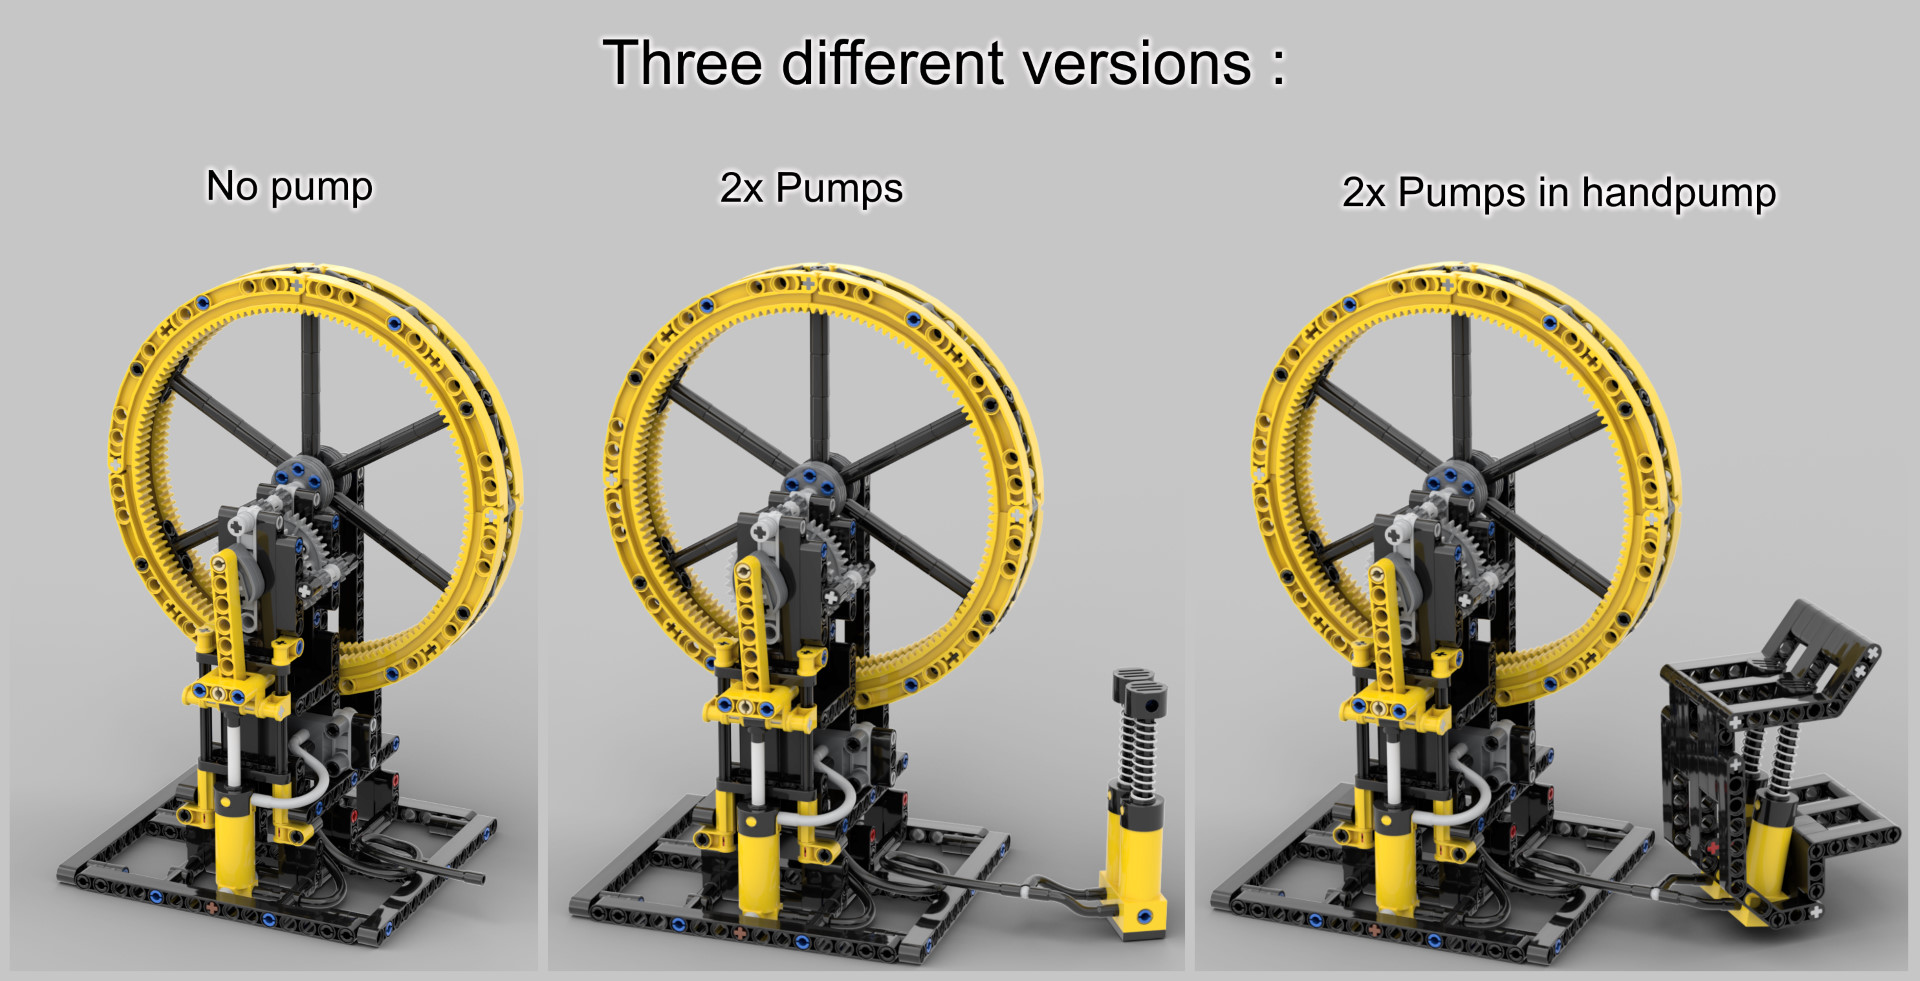 Vertical Lego Pneumatic Engine